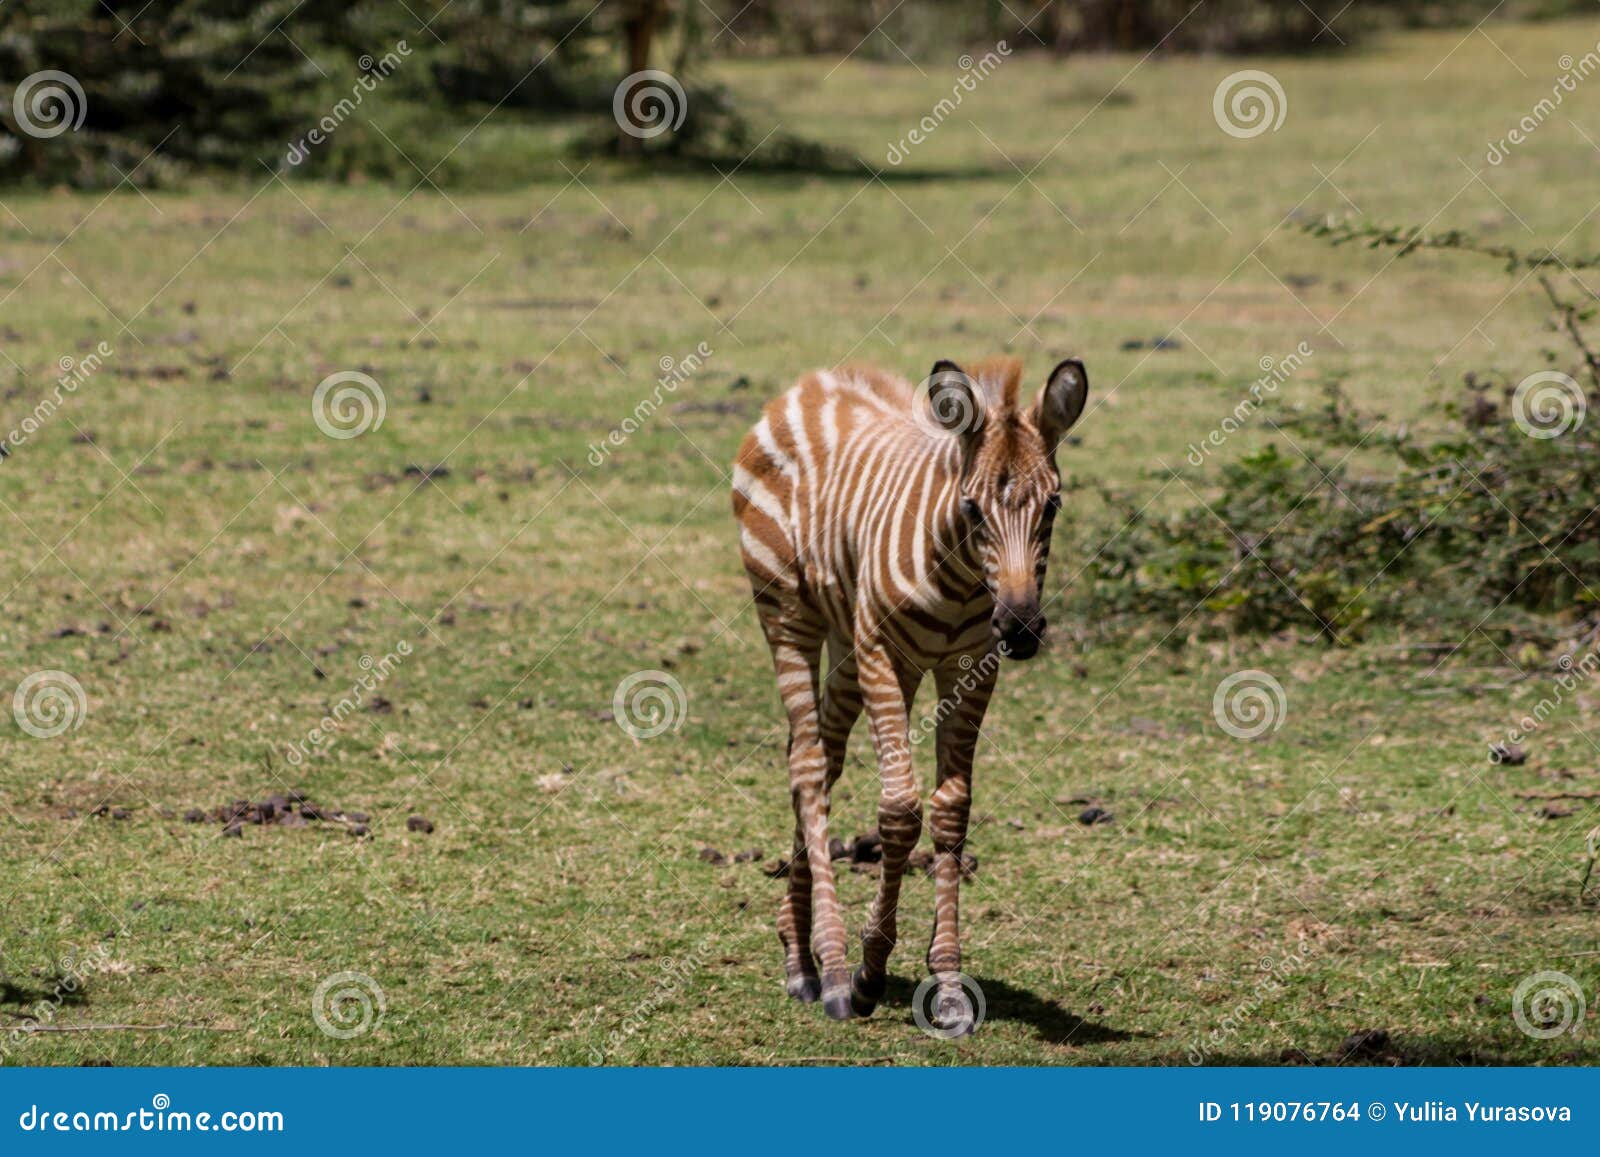 Pijler Steken Memo Kleine Bruine Zebra in Afrikaanse Savanne Stock Foto - Image of velen,  afrika: 119076764